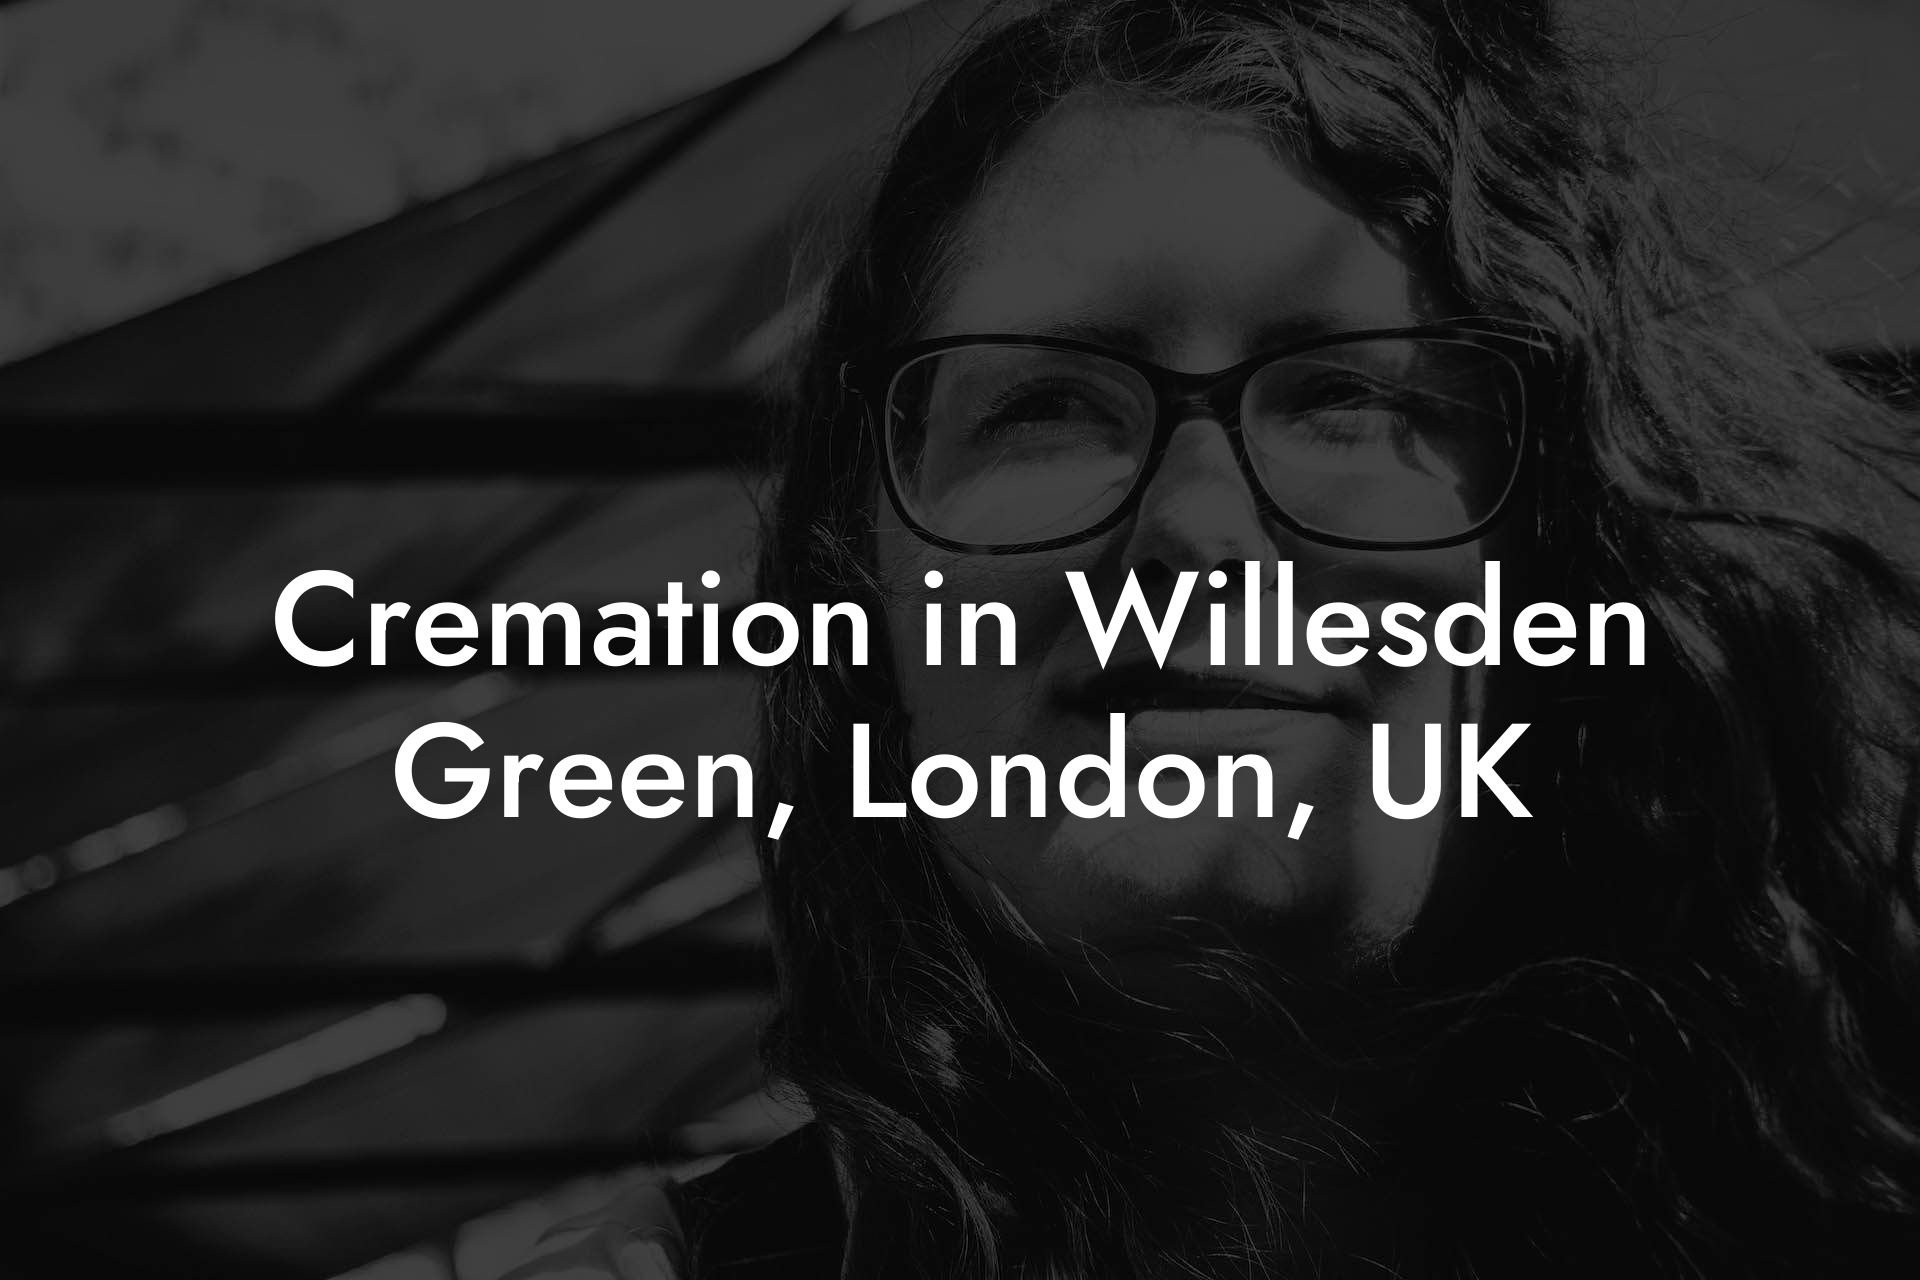 Cremation in Willesden Green, London, UK